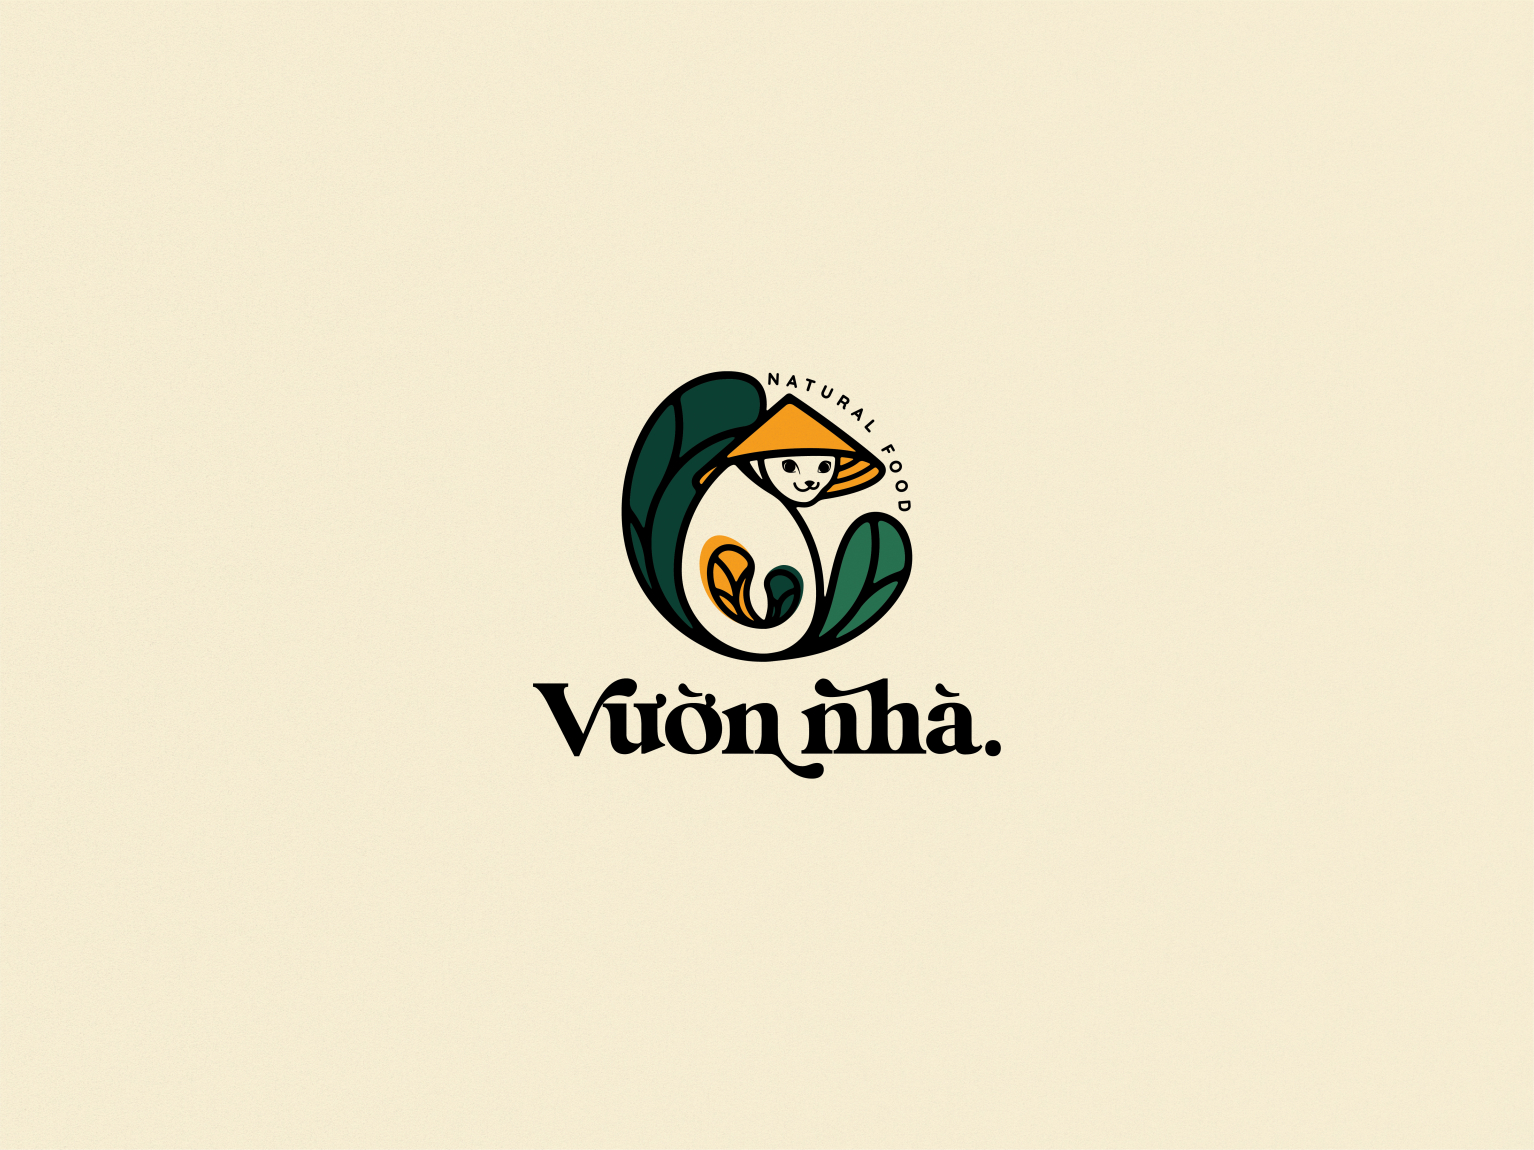 Logo - Vuonnha by Thanh Soledas on Dribbble